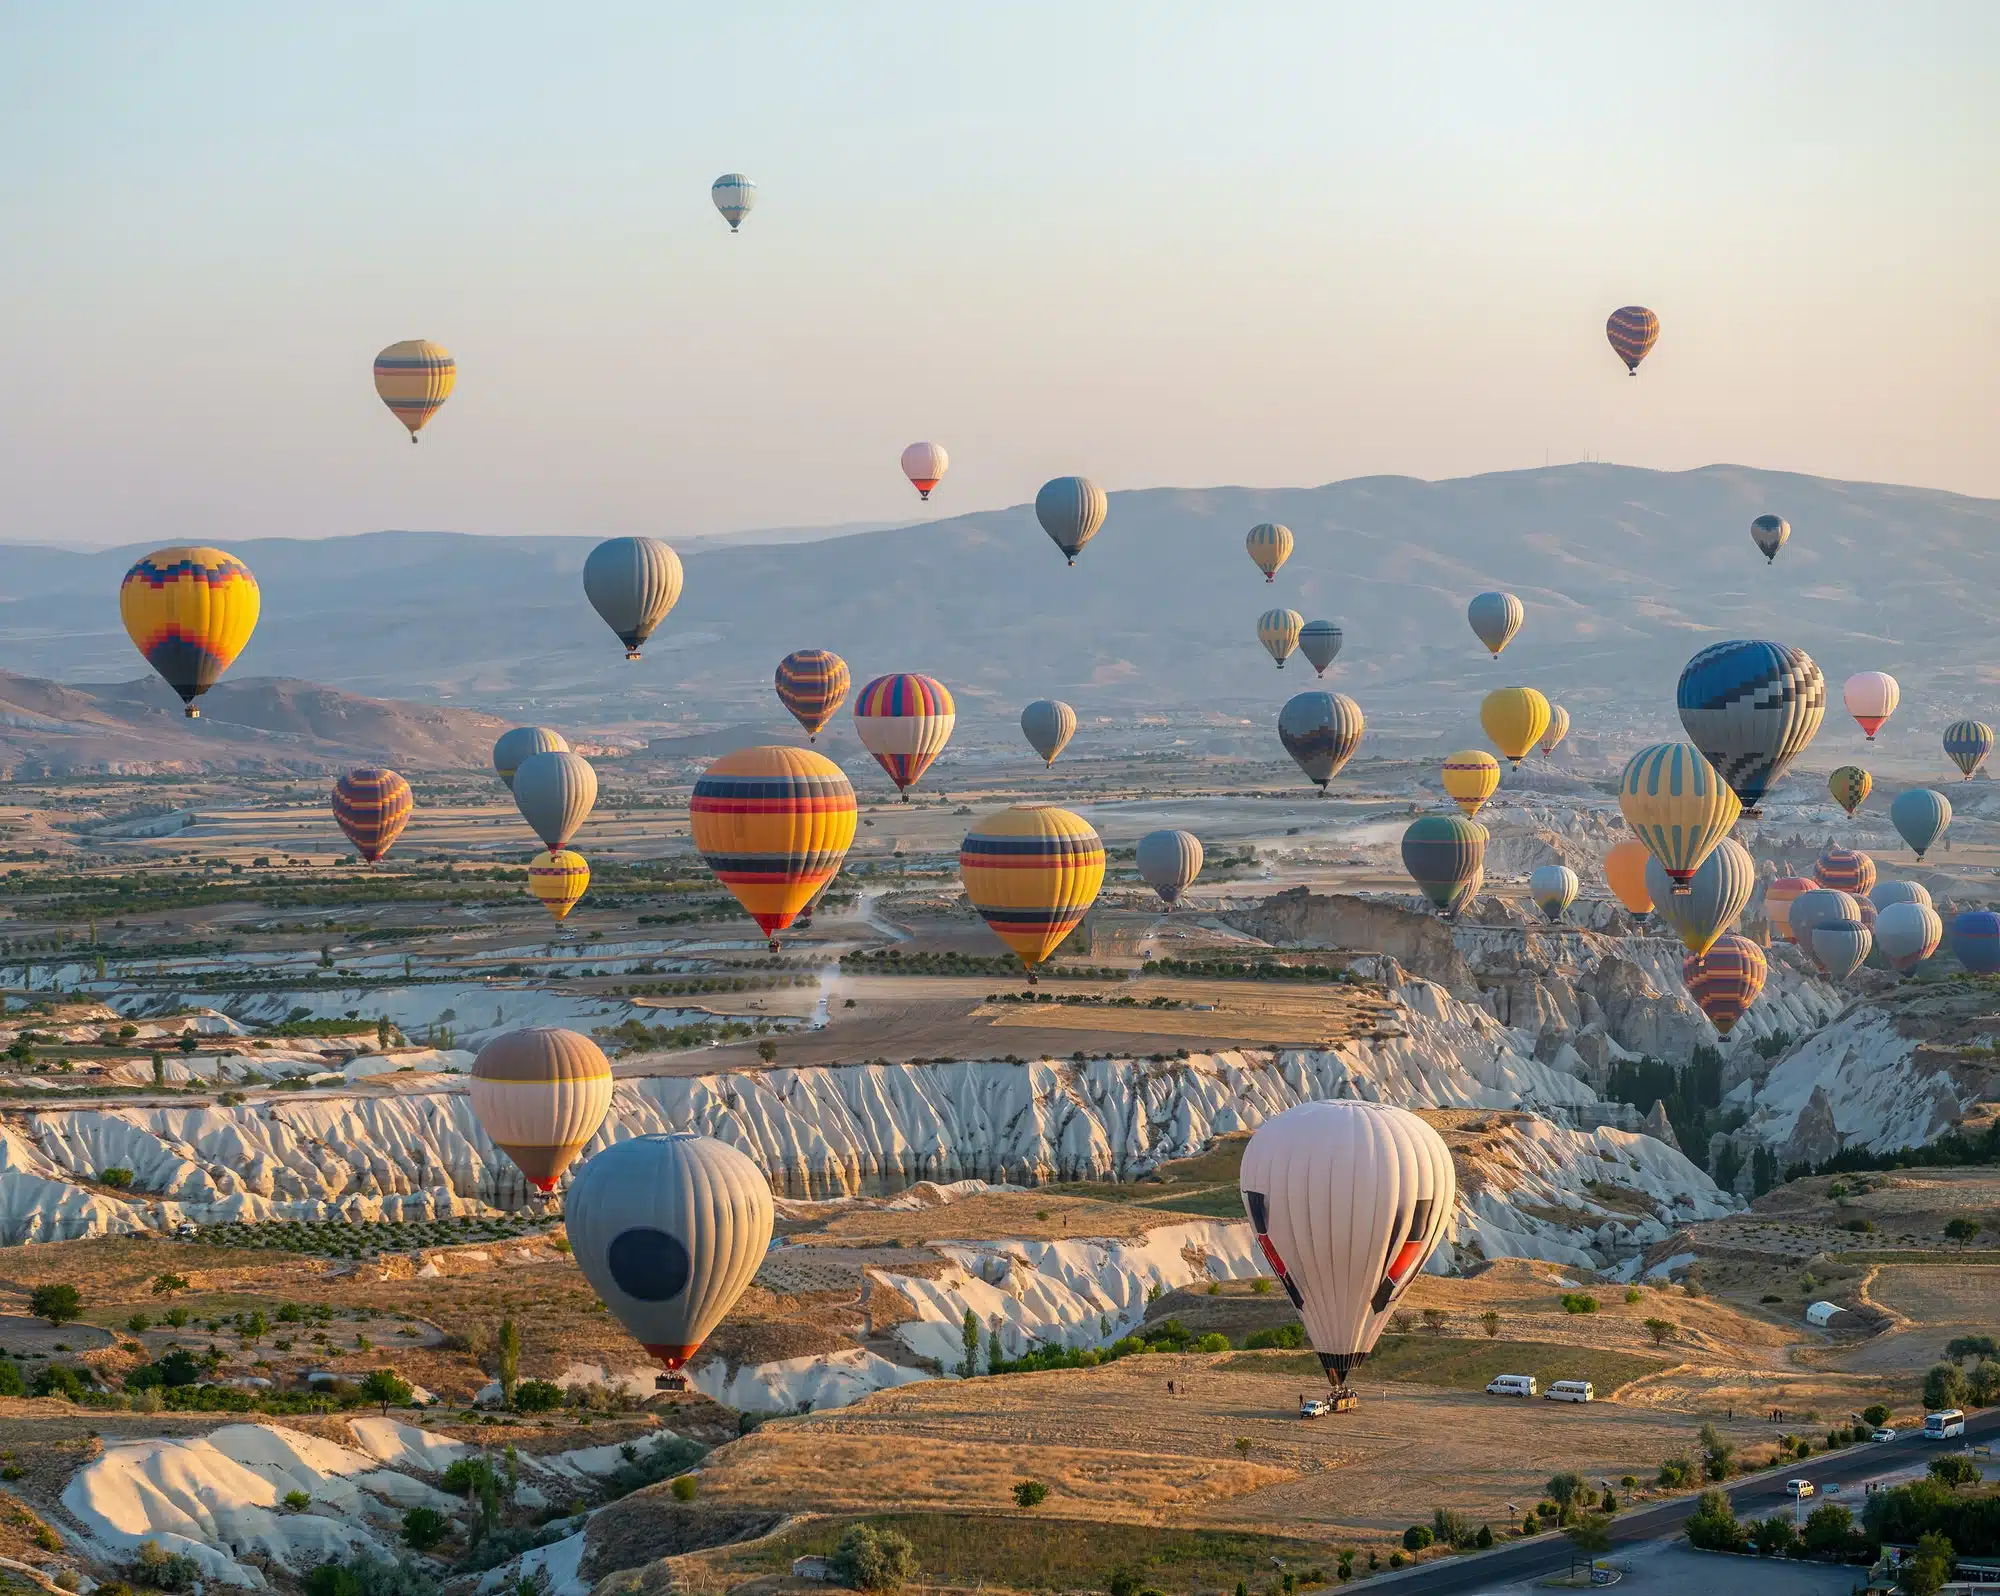 Action im urlaub: Heißluftballon-Fahrten über Felsen